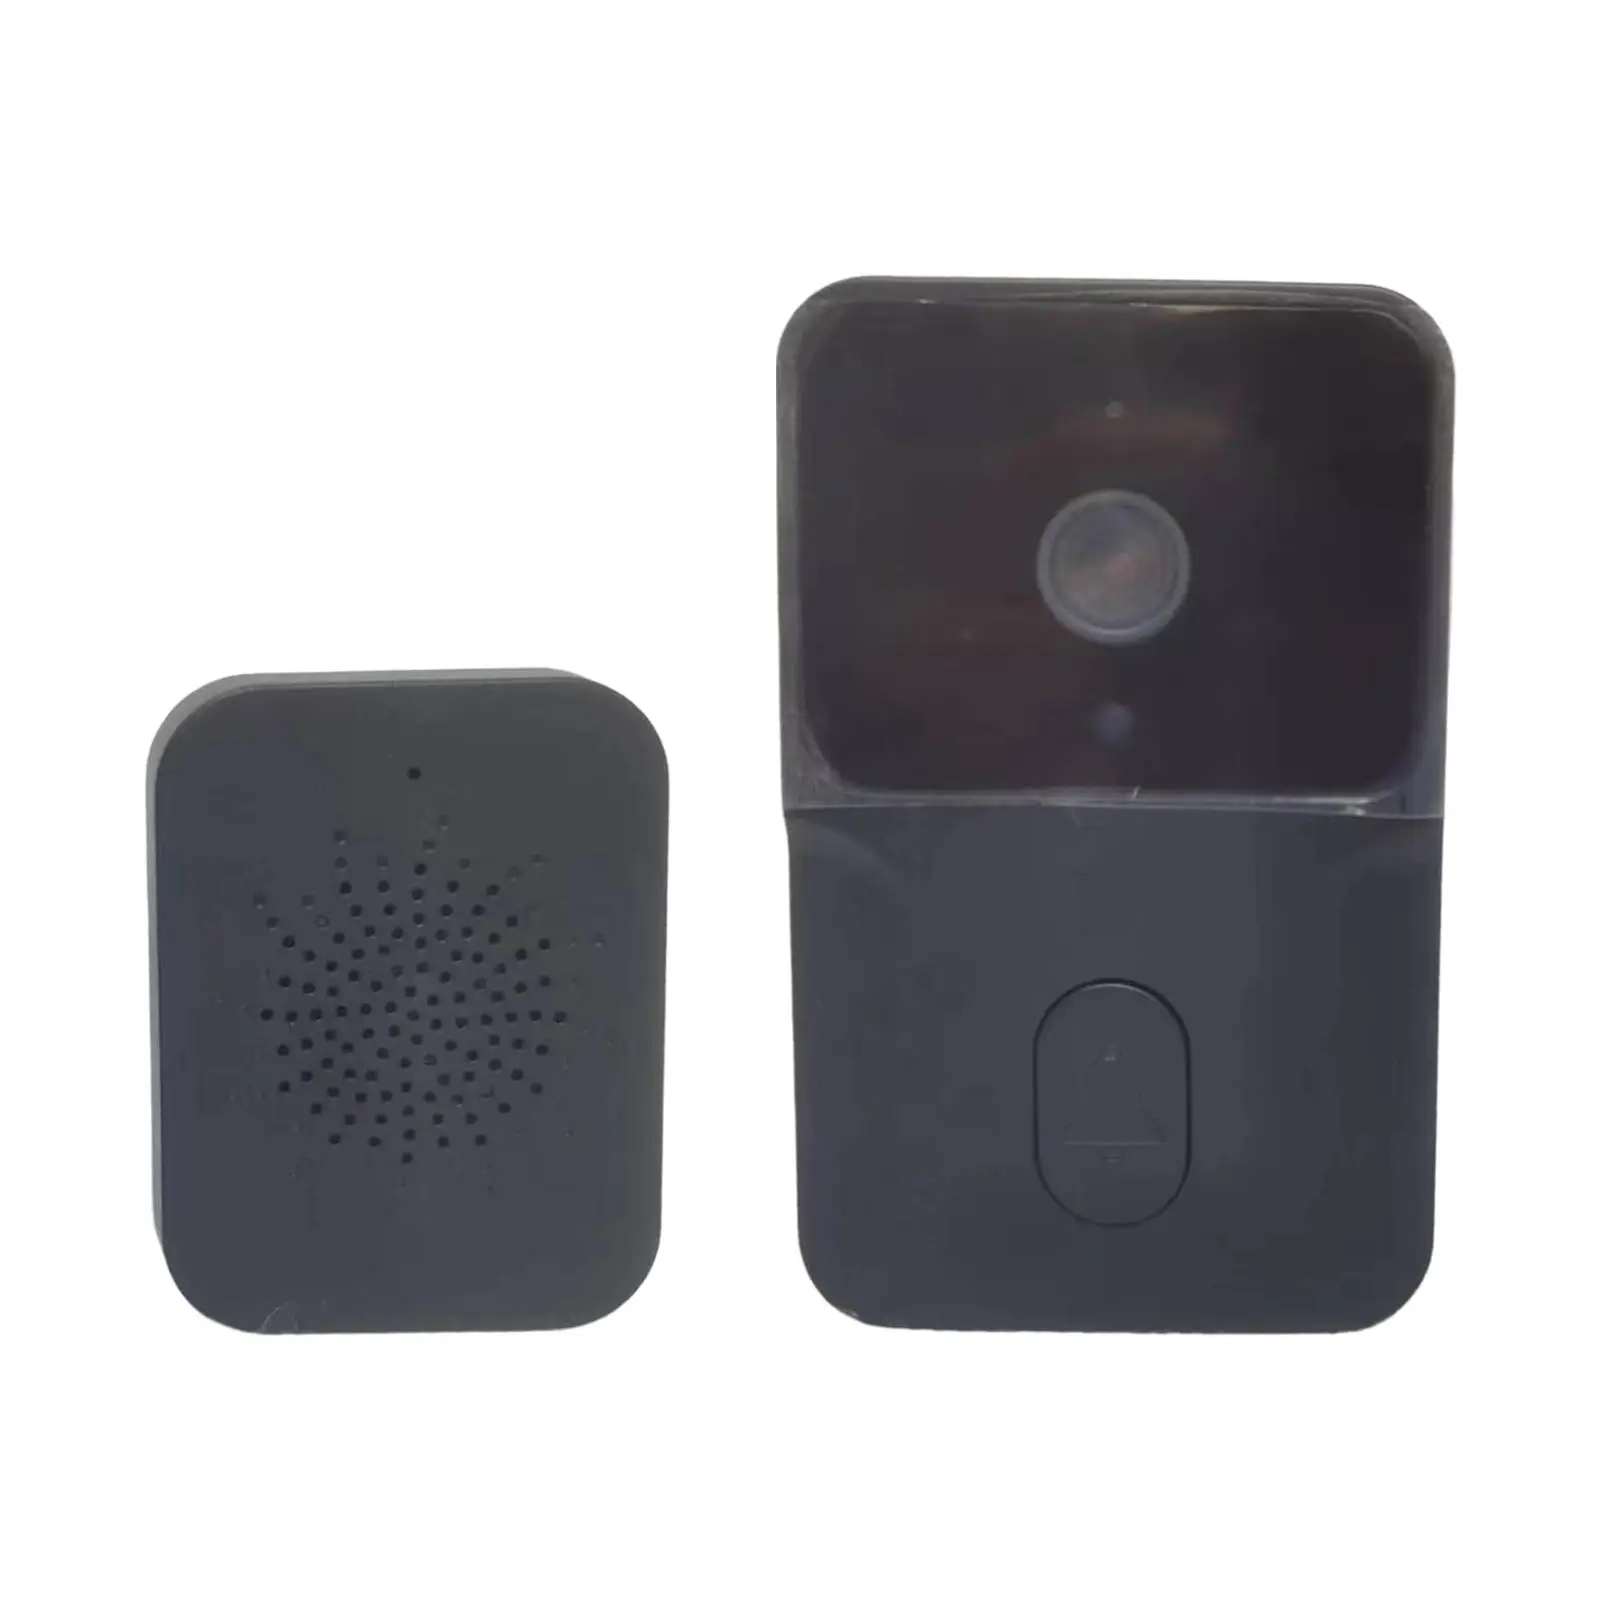 Doorbell Camera Wireless Real Time Video Door Chime Kit Waterproof Video Doorbell for Home Playhouse Businesses School Classroom